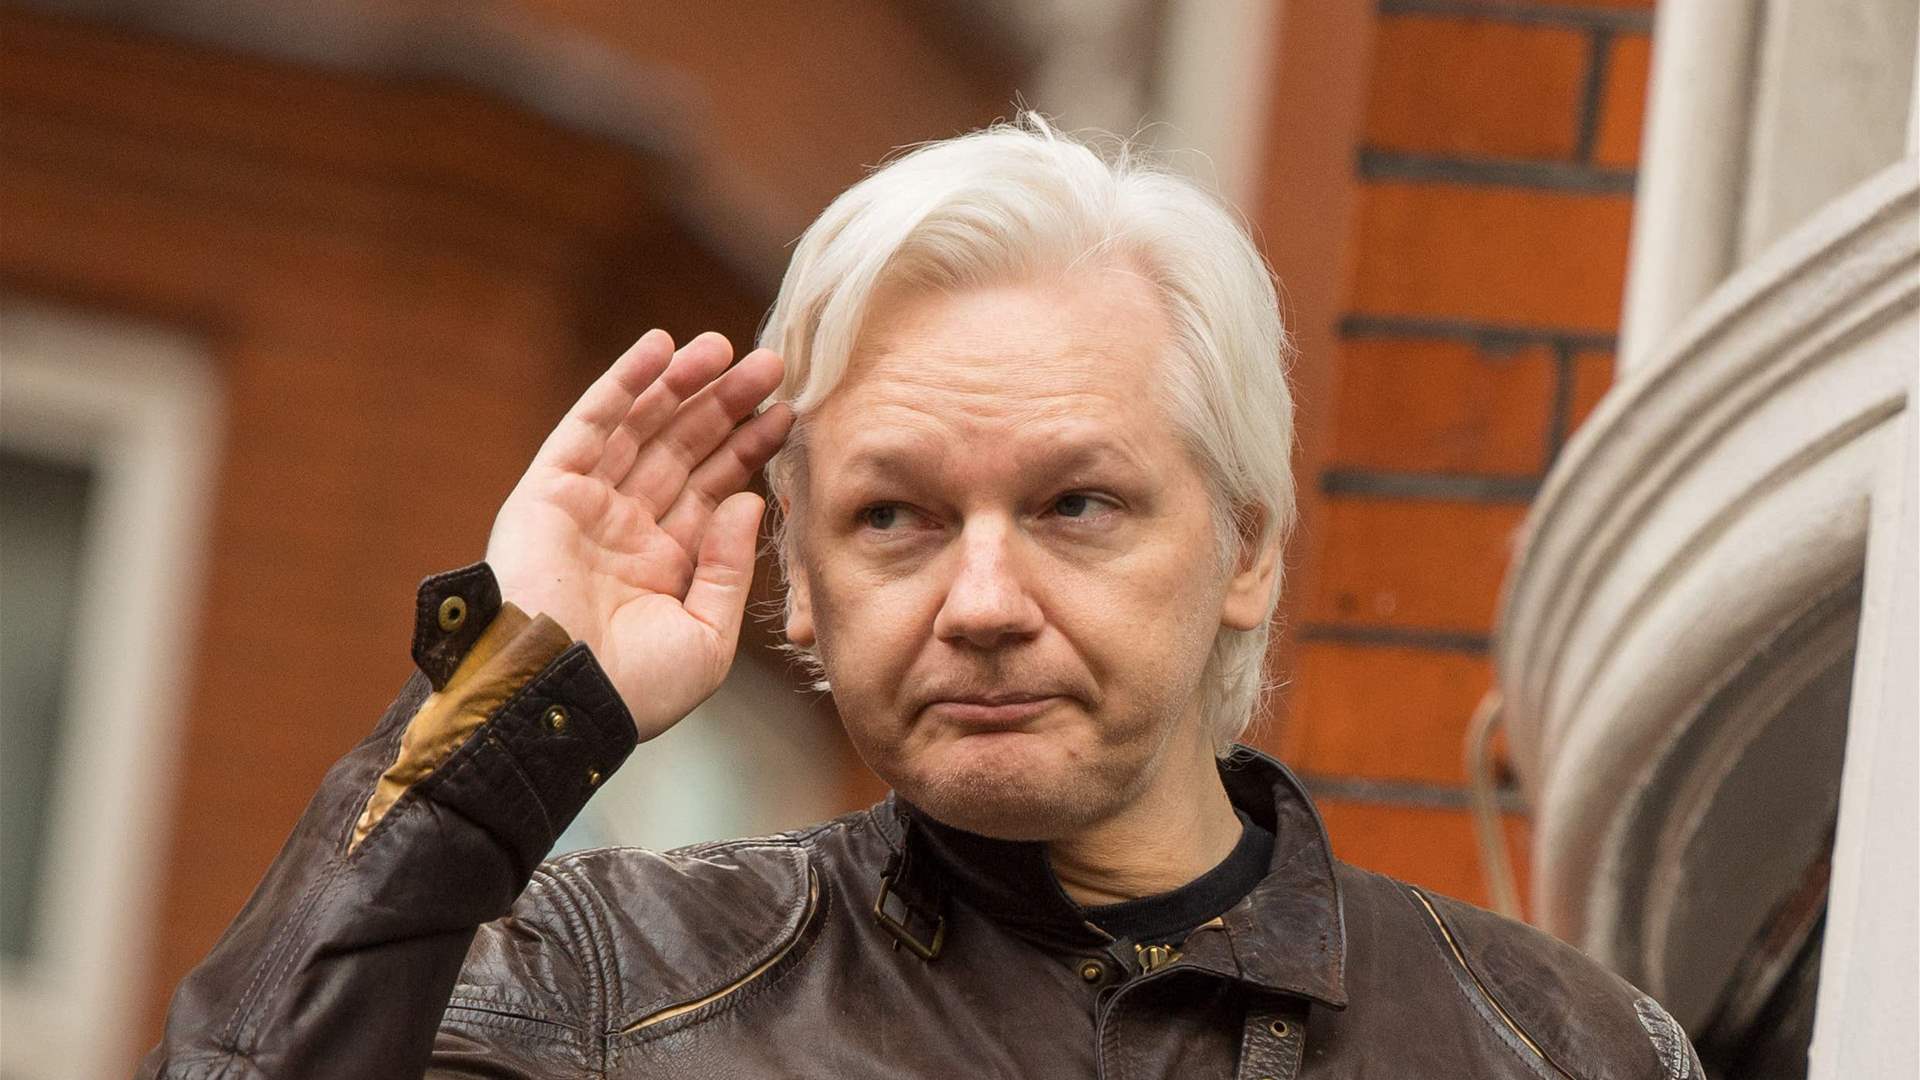 Julian Assange released: The end of a legal battle